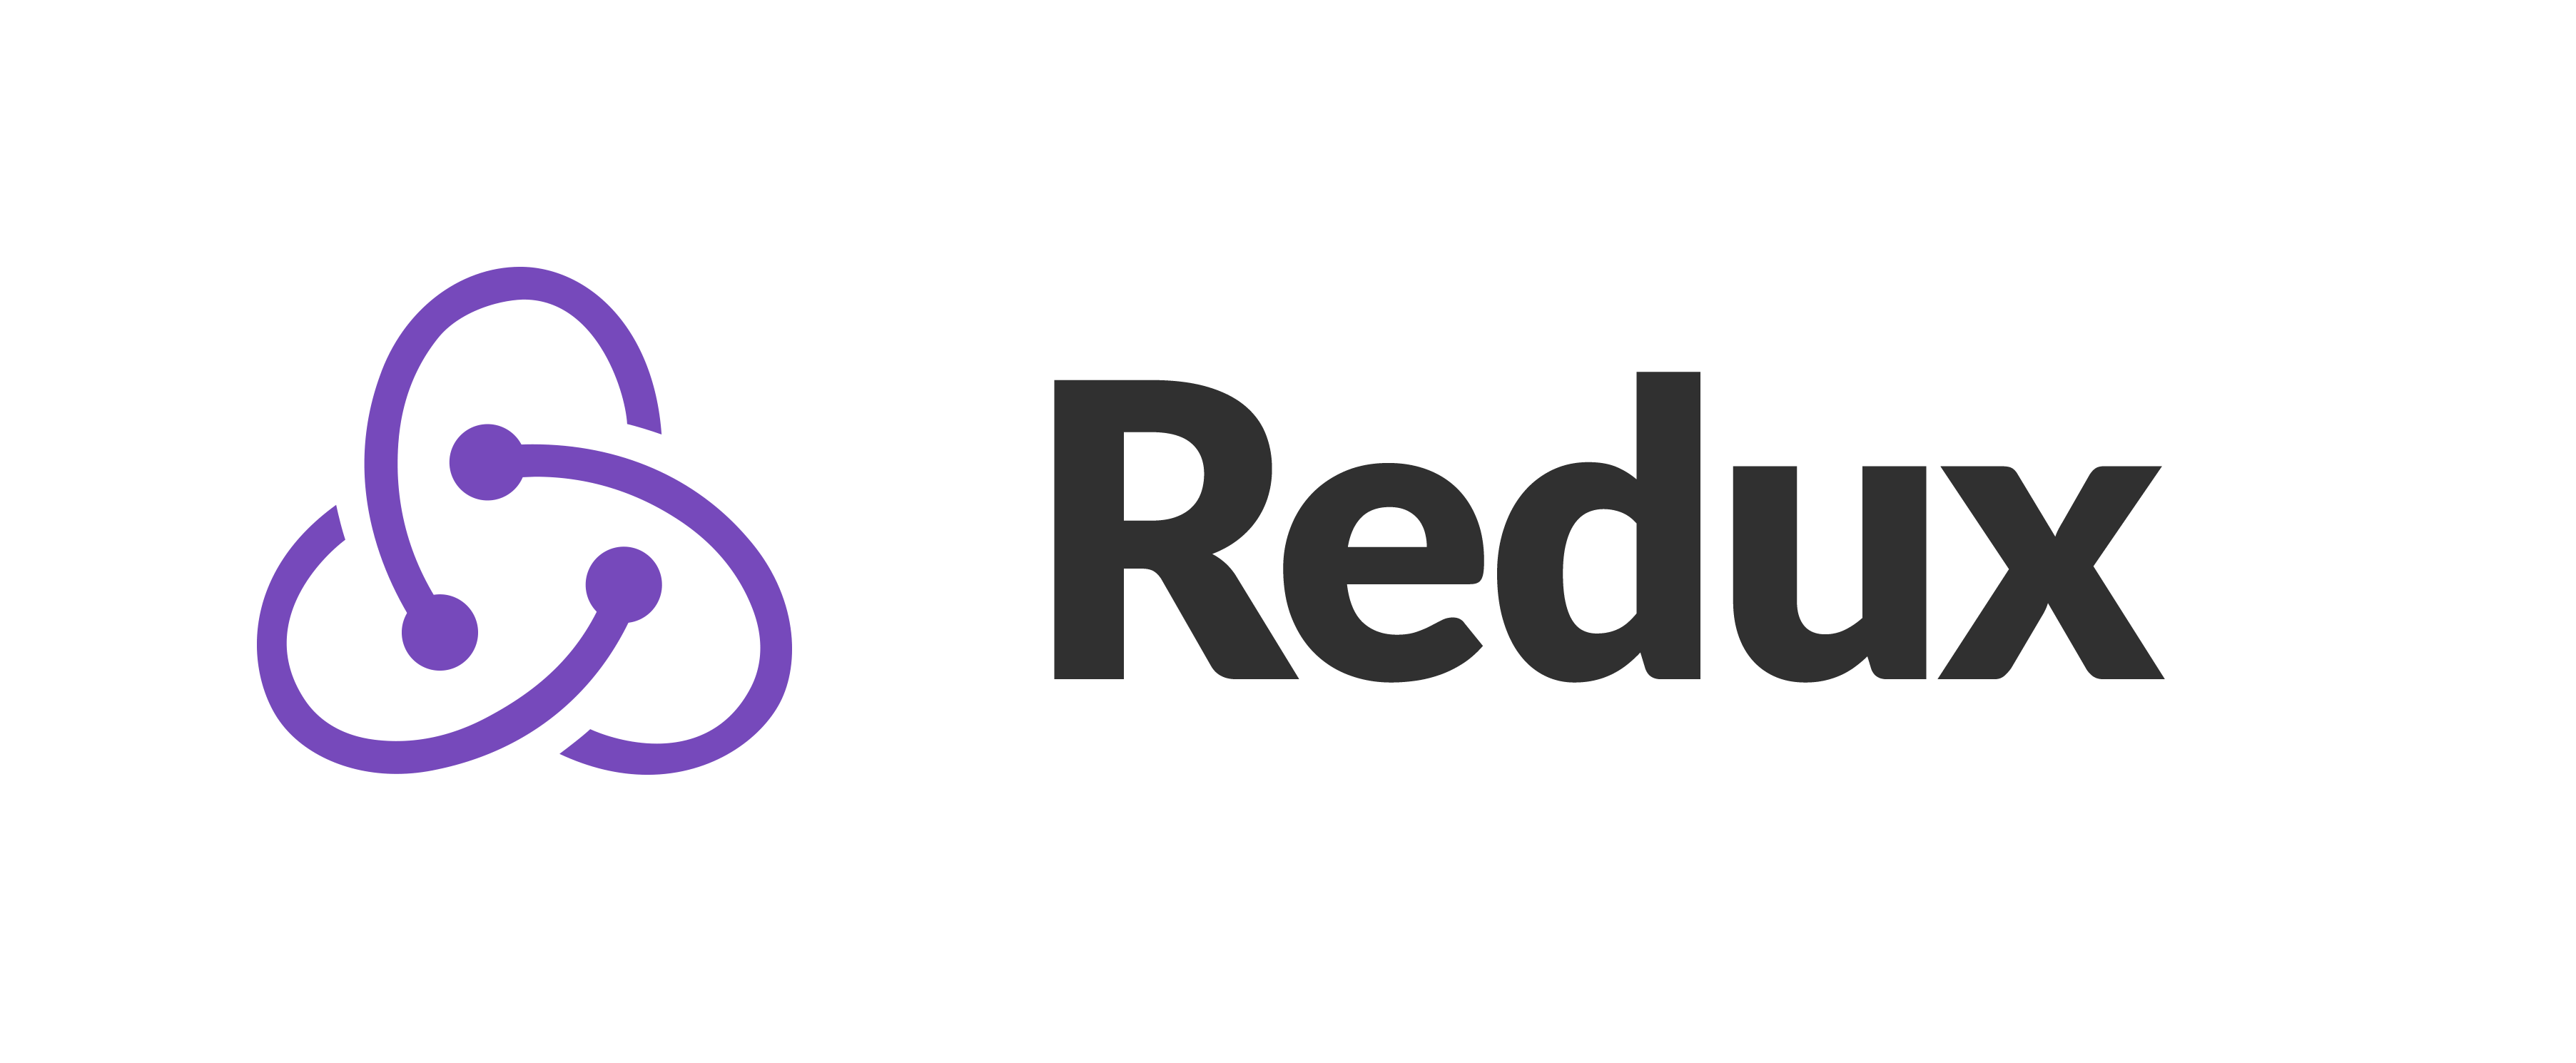 Redux Logo - redux/logo at master · reduxjs/redux · GitHub